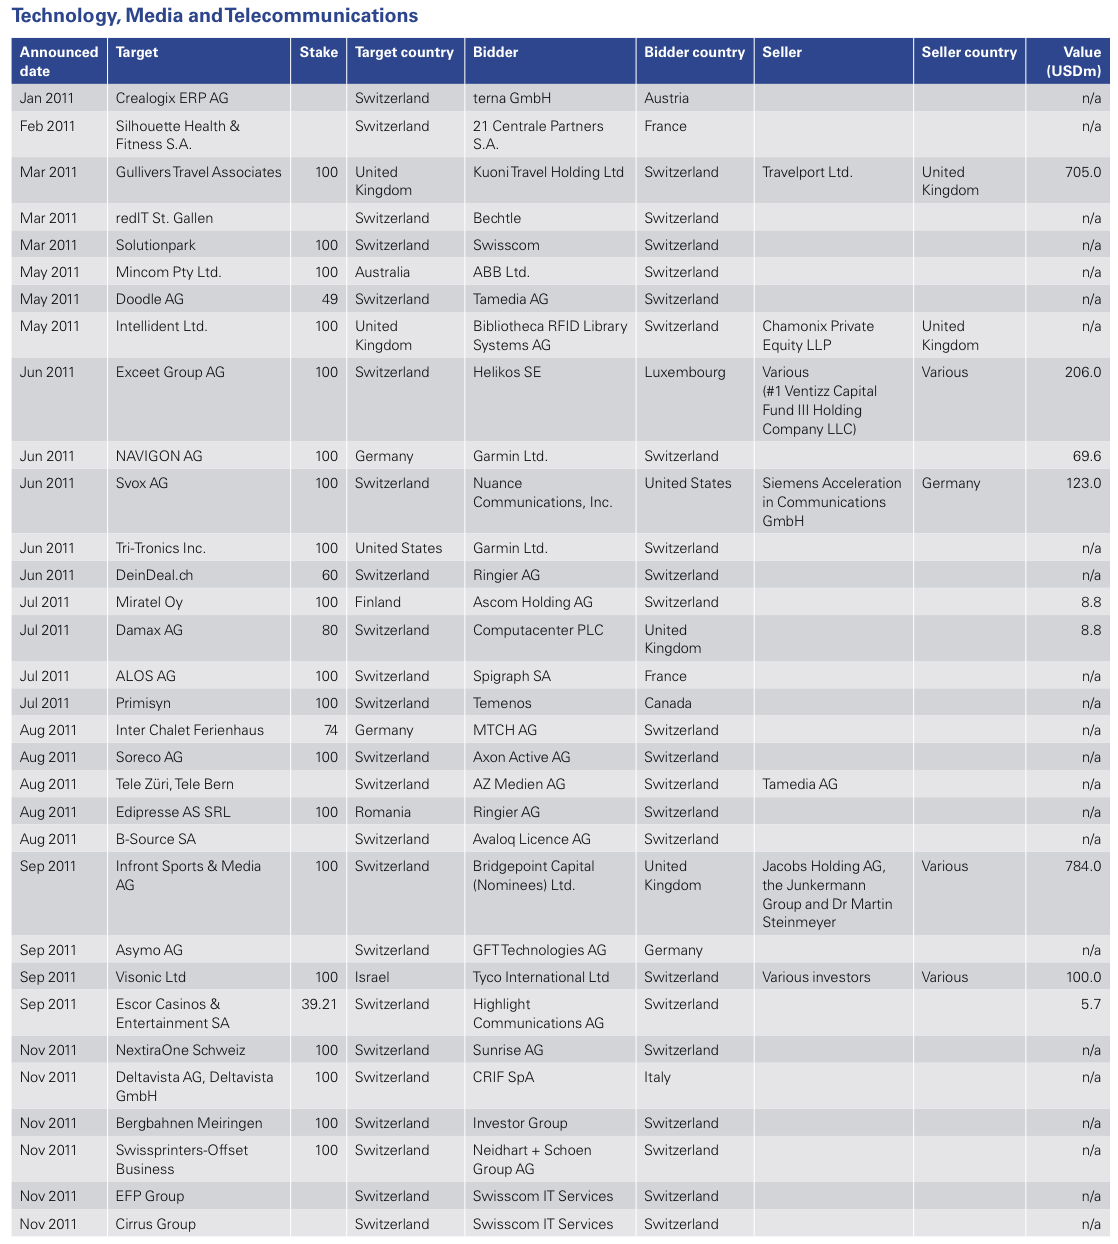 Figure 20: List of 2011 Swiss M&A Transactions